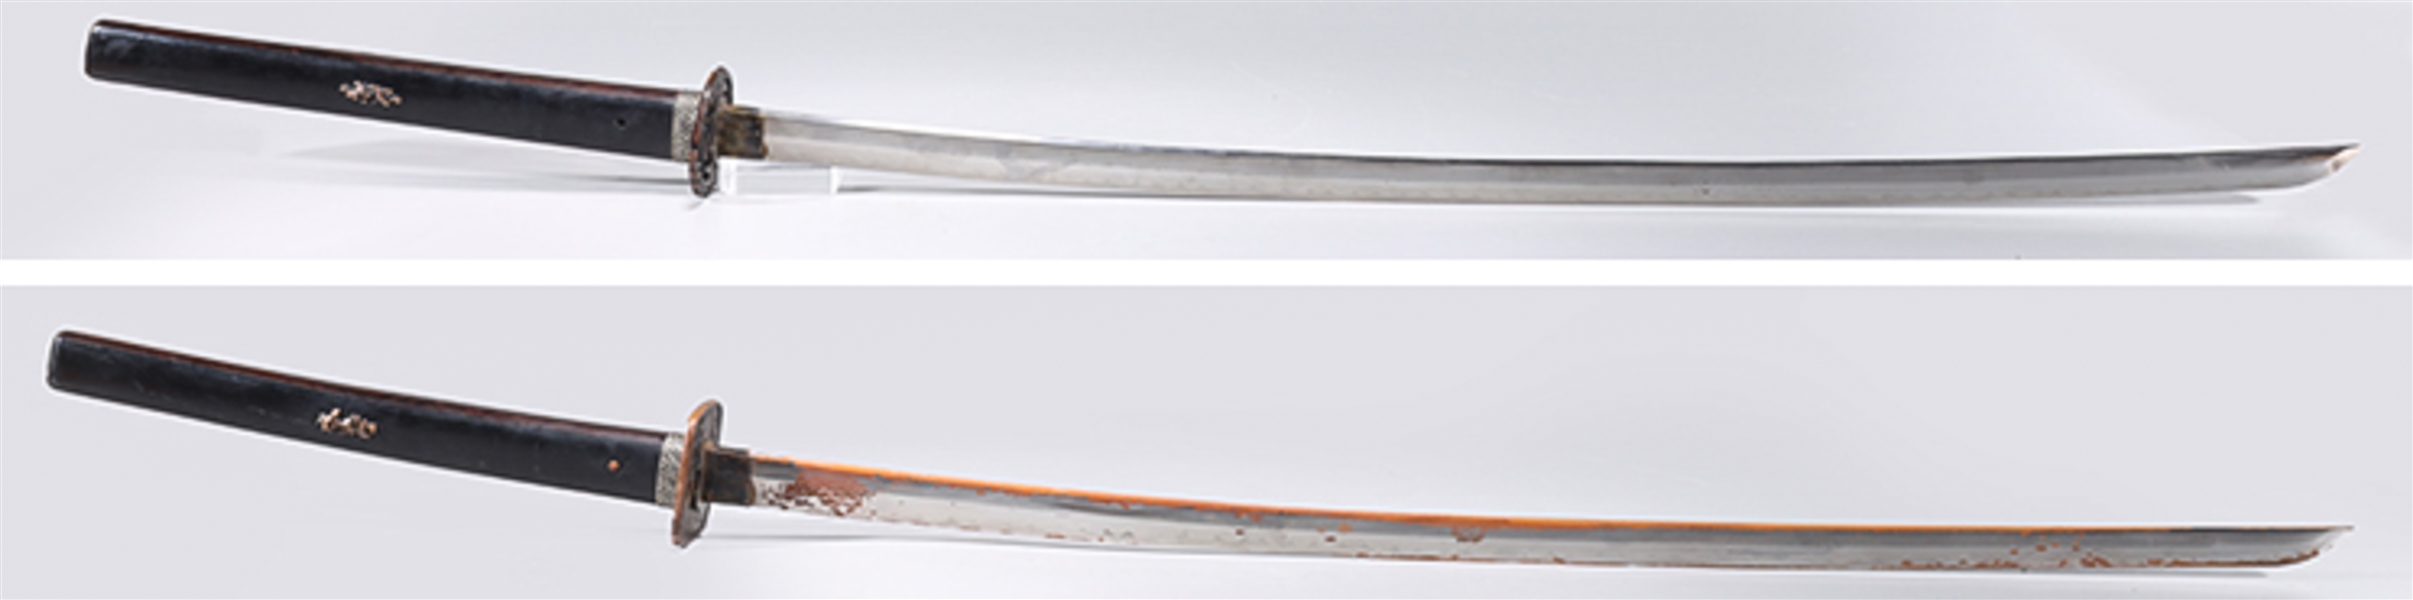 Two Japanese sheathed samurai swords  2ac3e3